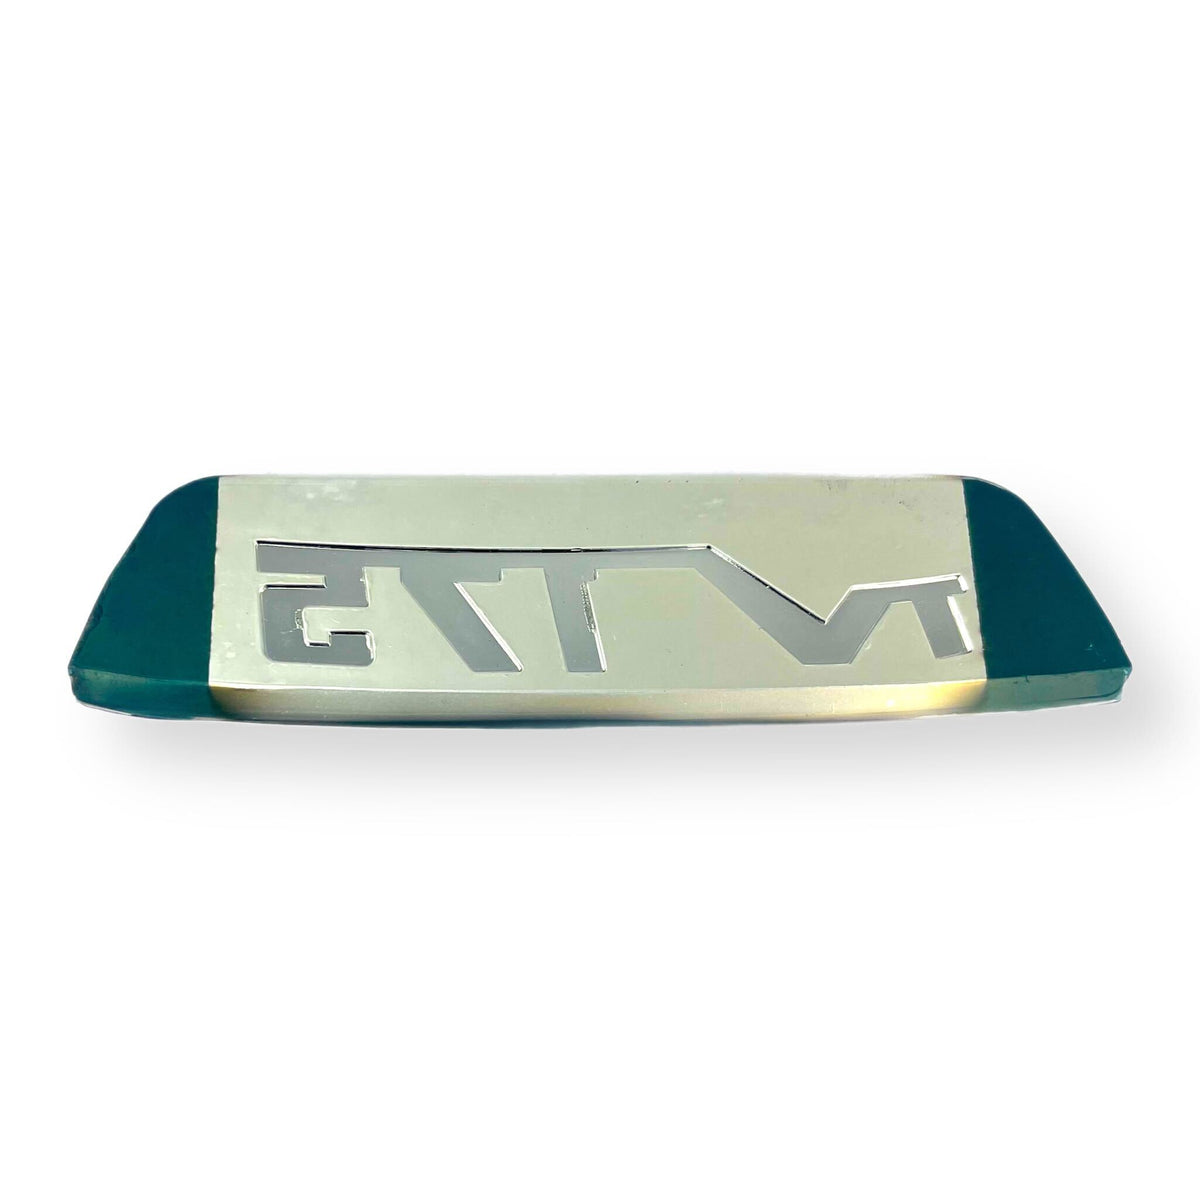 Lambretta Series 3 TV 175 3D Rear Frame Badge Insert - Silver / Blue